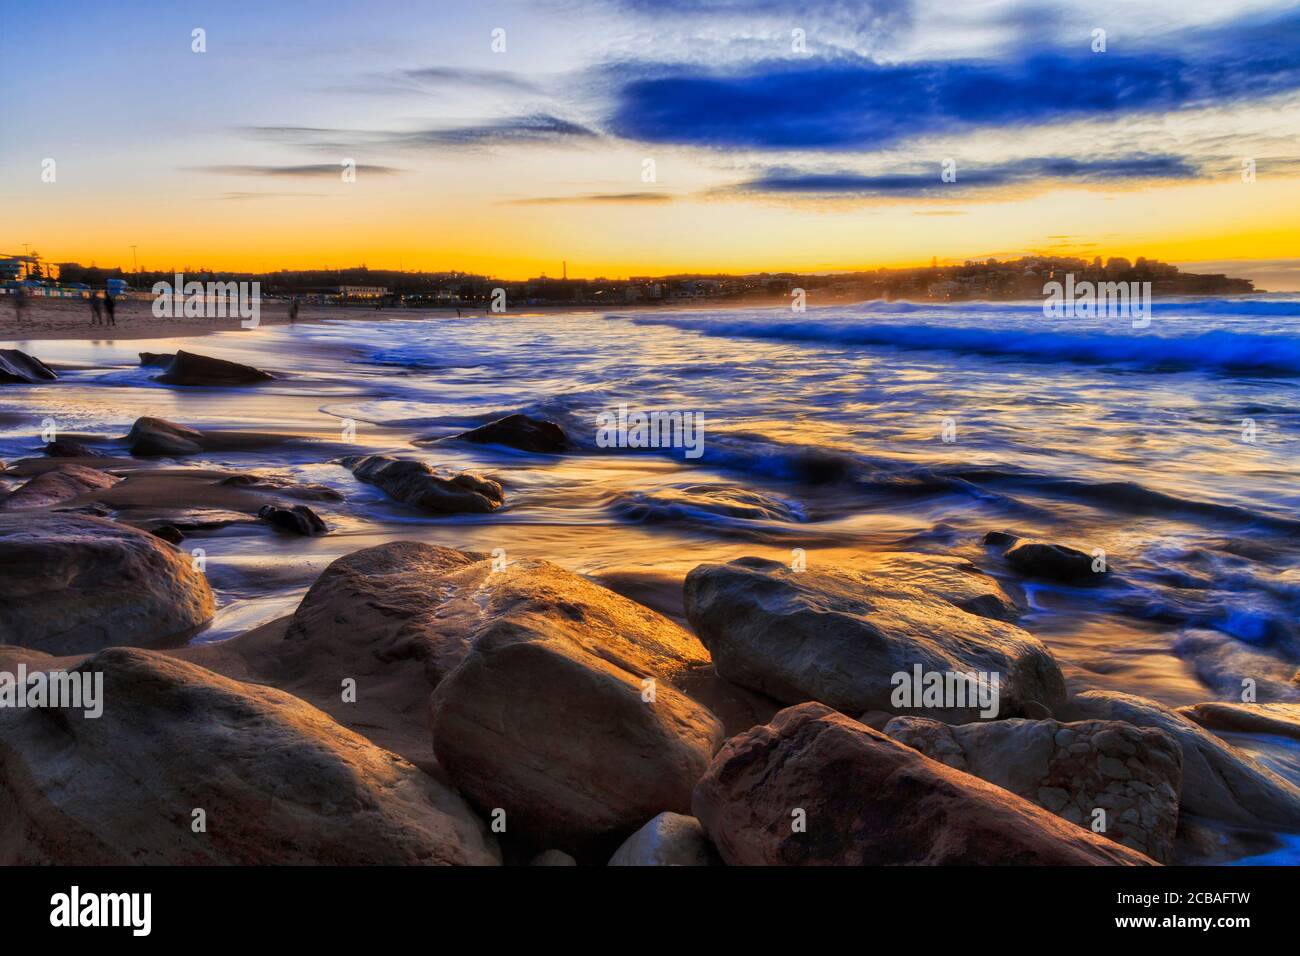 Sunrise at famous Bondi beach of Sydney on Pacific coast facing sandy beach and rocks in warm sun light. Stock Photo